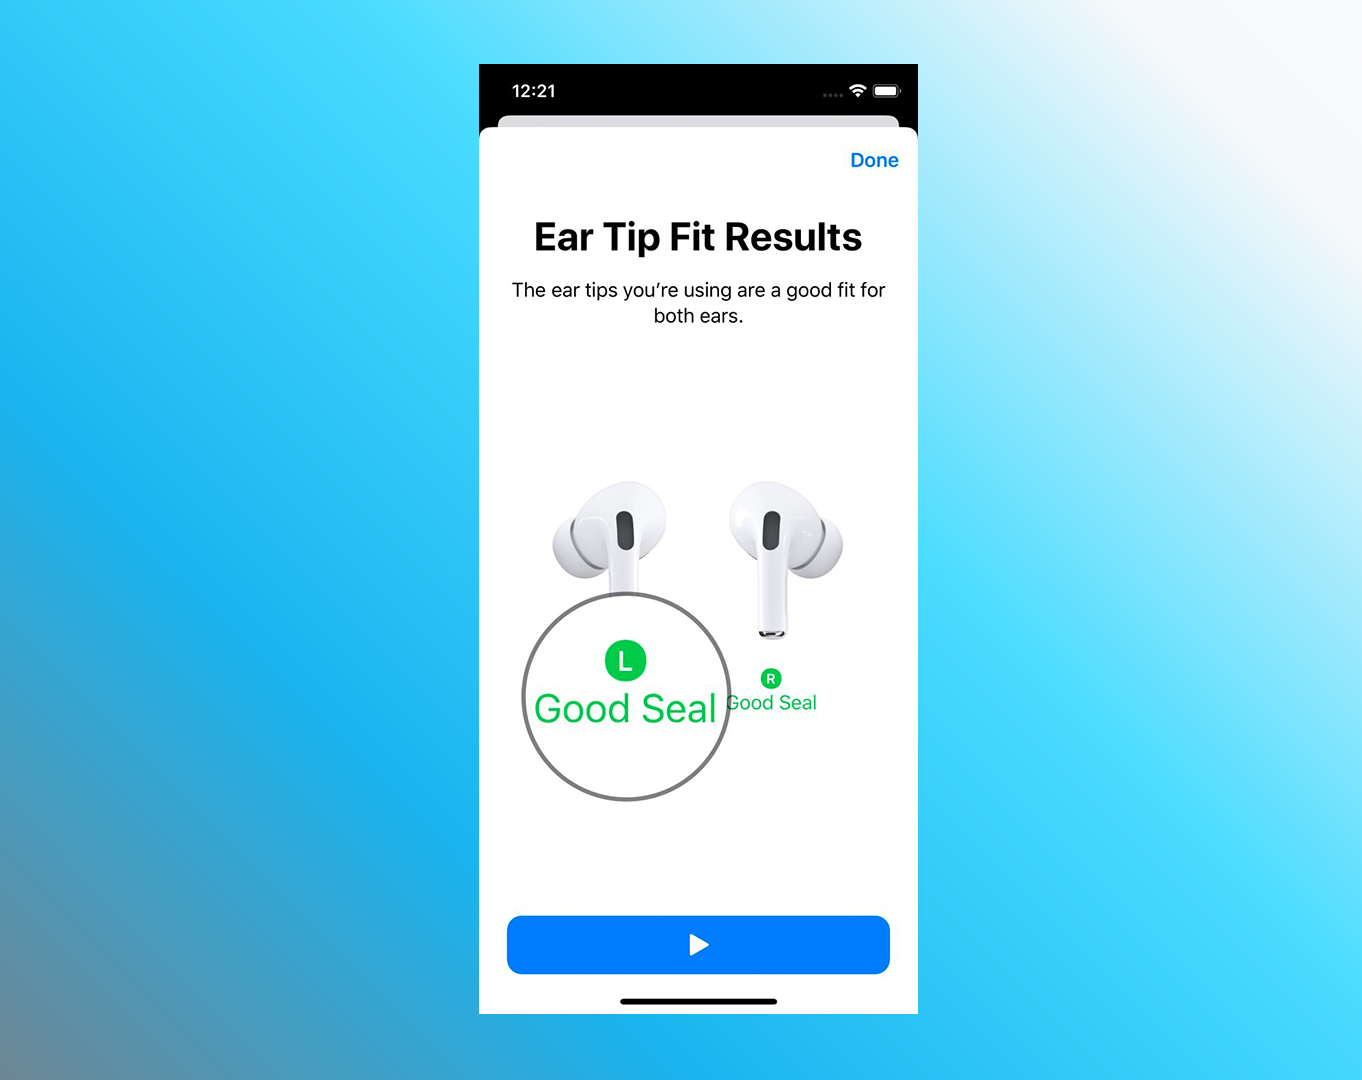 kiem tra tai nghe airpods pro 4 6 Mẹo cực hay khi sử dụng AirPods Pro